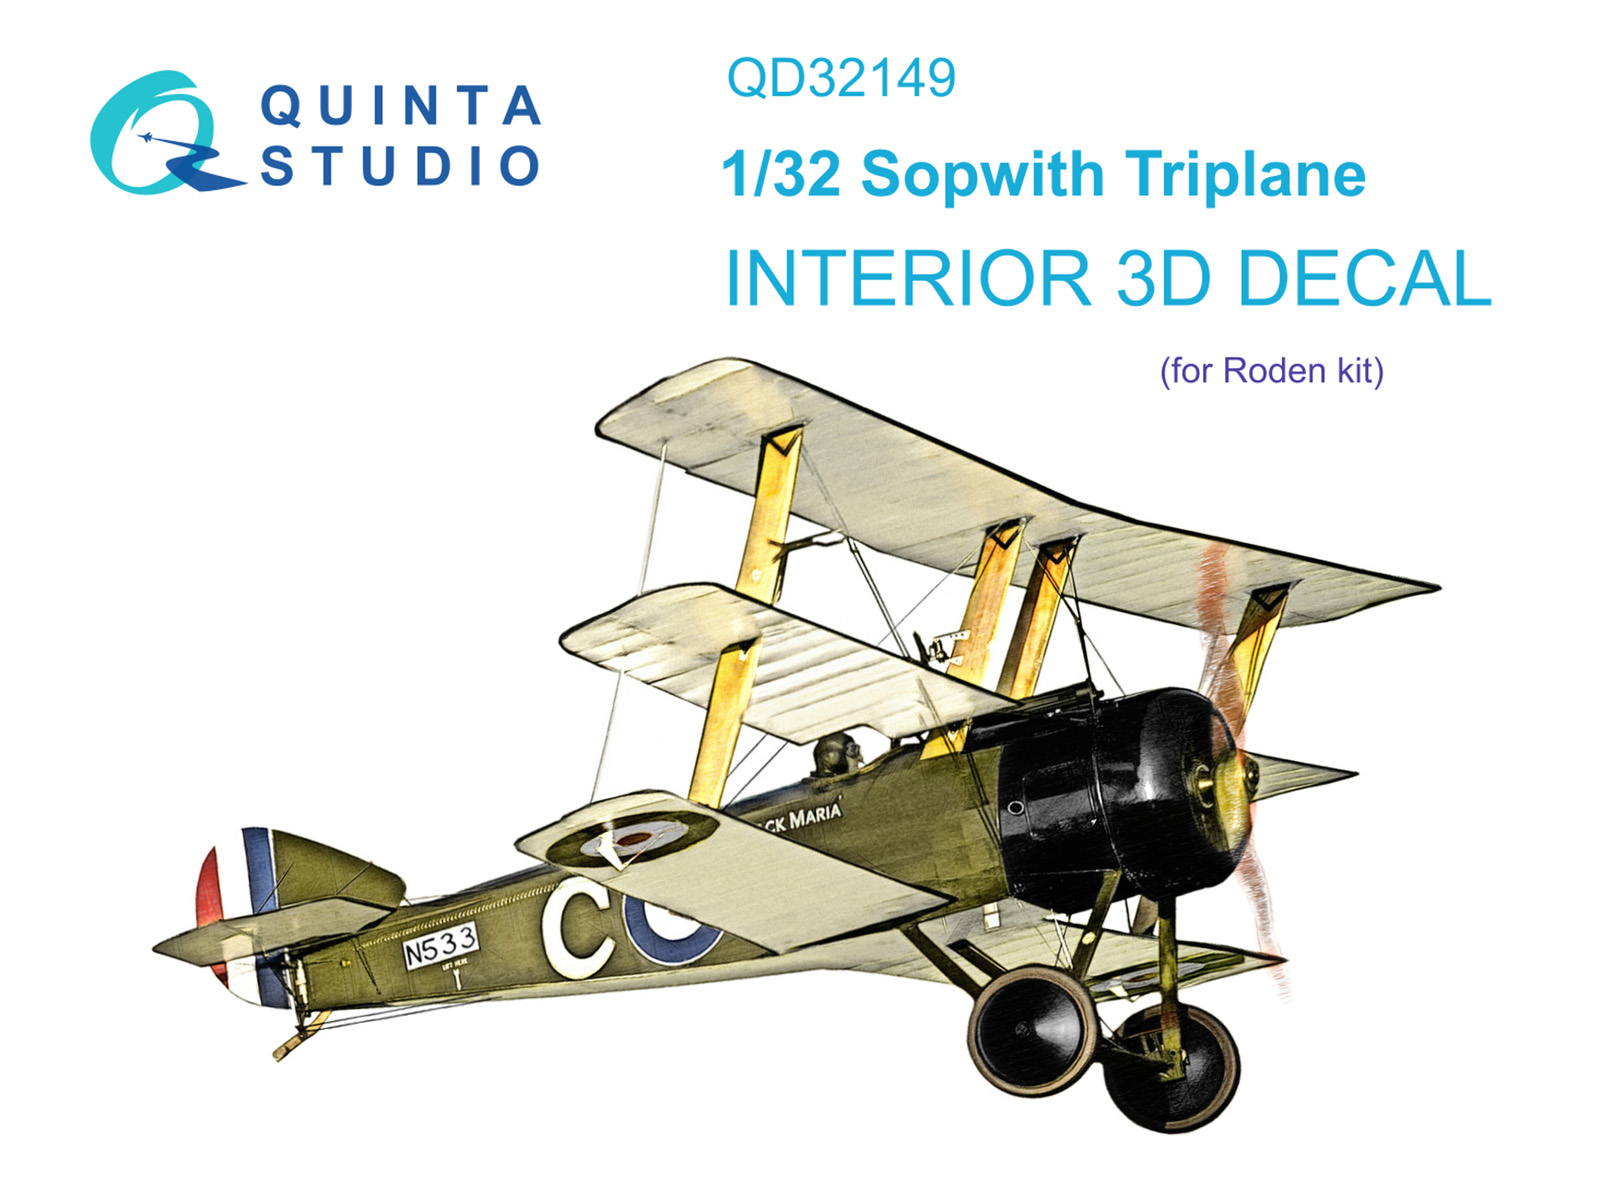 3D Декаль интерьера Quinta Studio 1/32 кабины Sopwith Triplane Roden QD32149